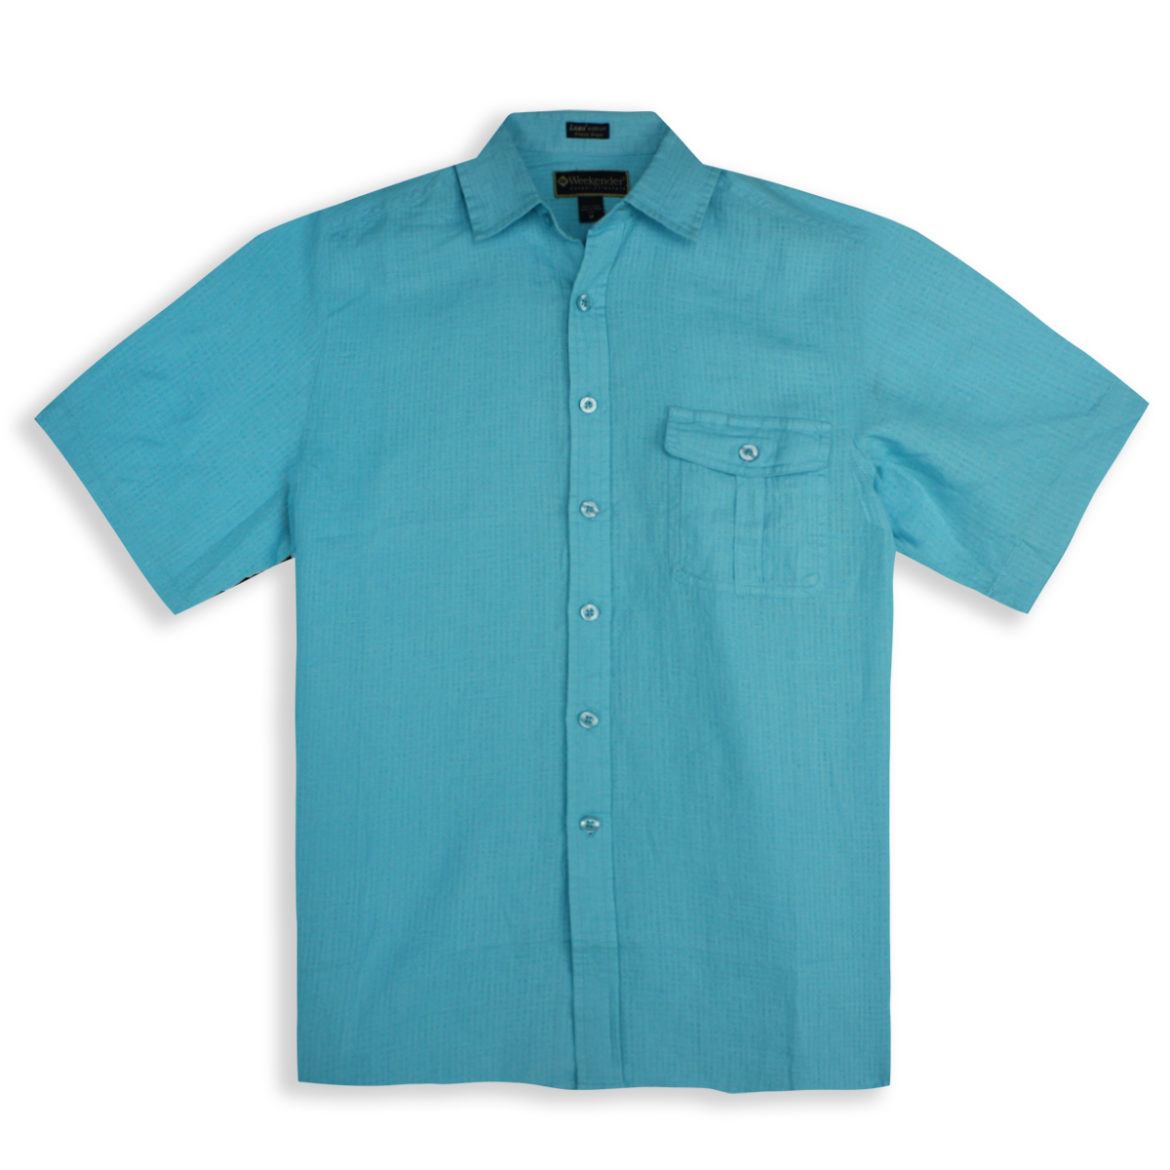 Weekender Men's Shirt-Cook Islands-Turquoise-front view